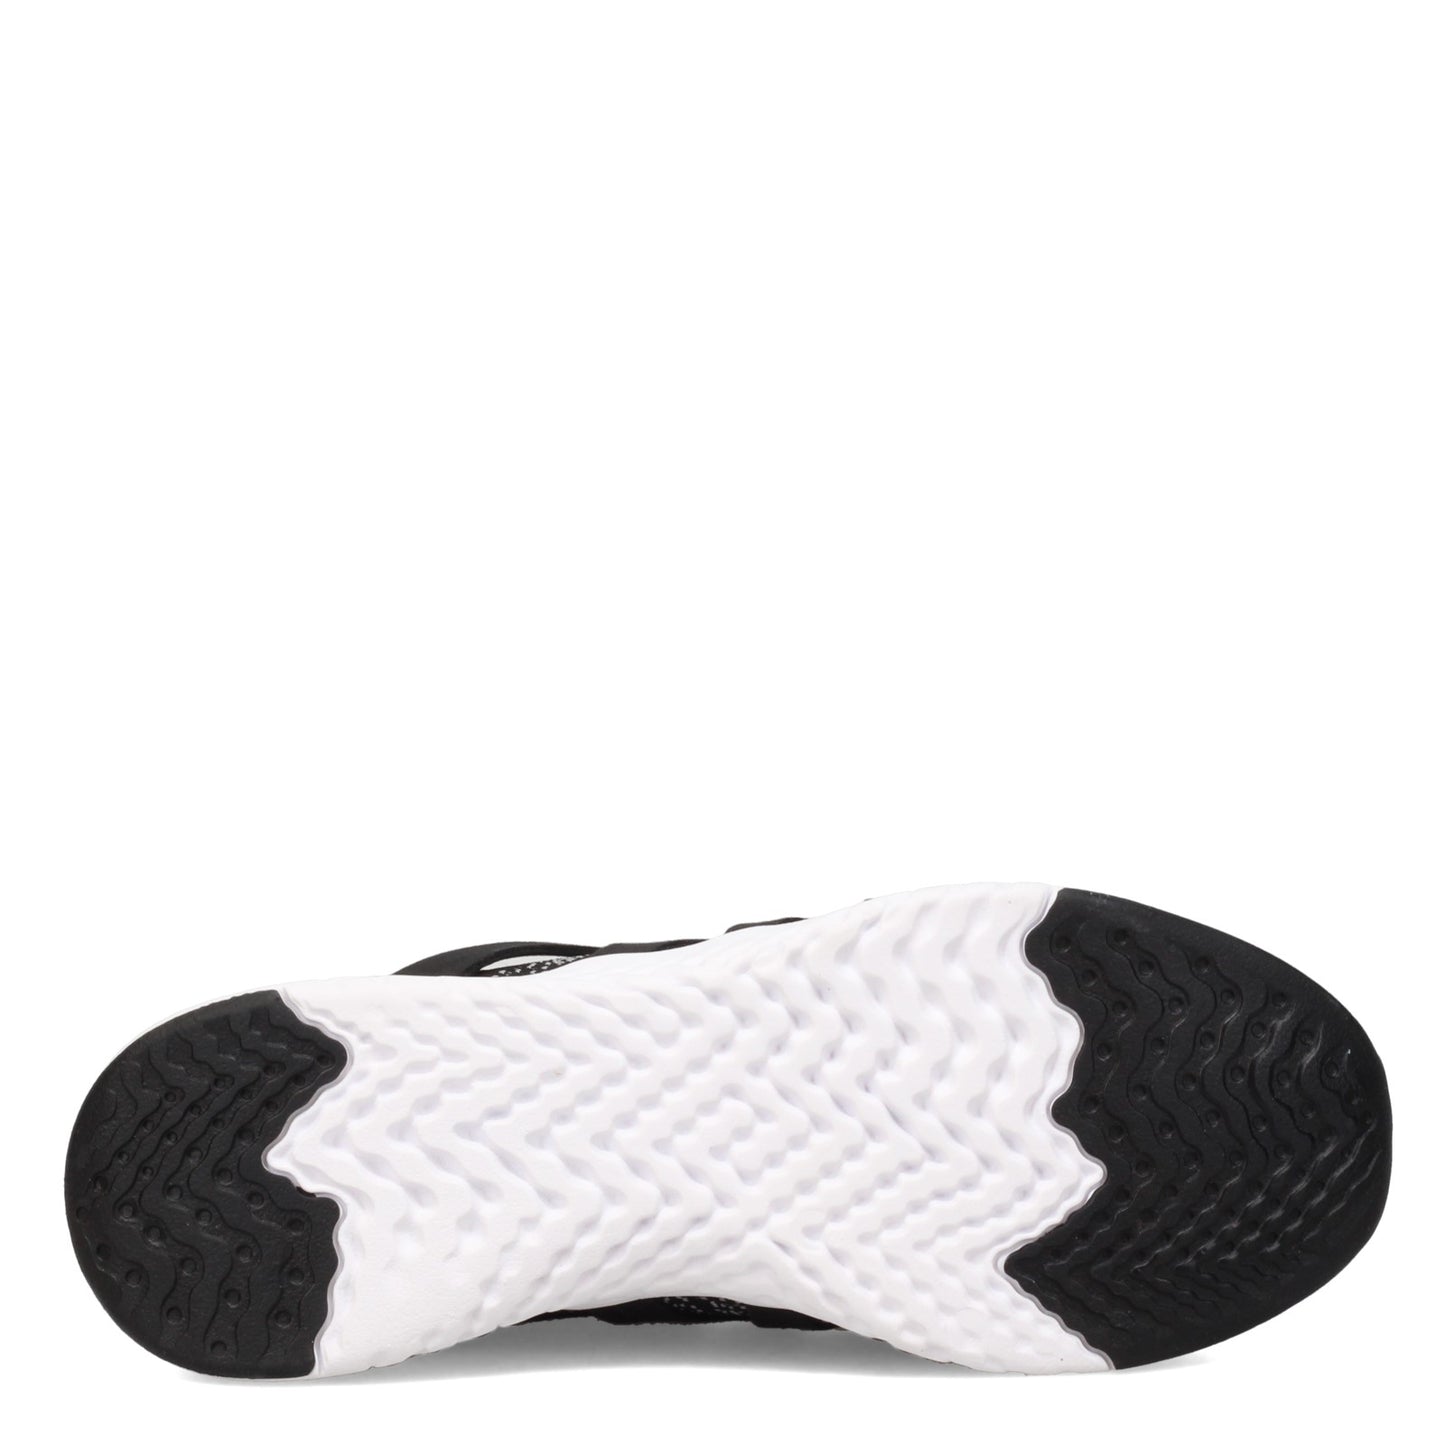 Peltz Shoes  Men's Frogg Toggs High & Dry Sneaker BLACK / GRAY 4HD111-003